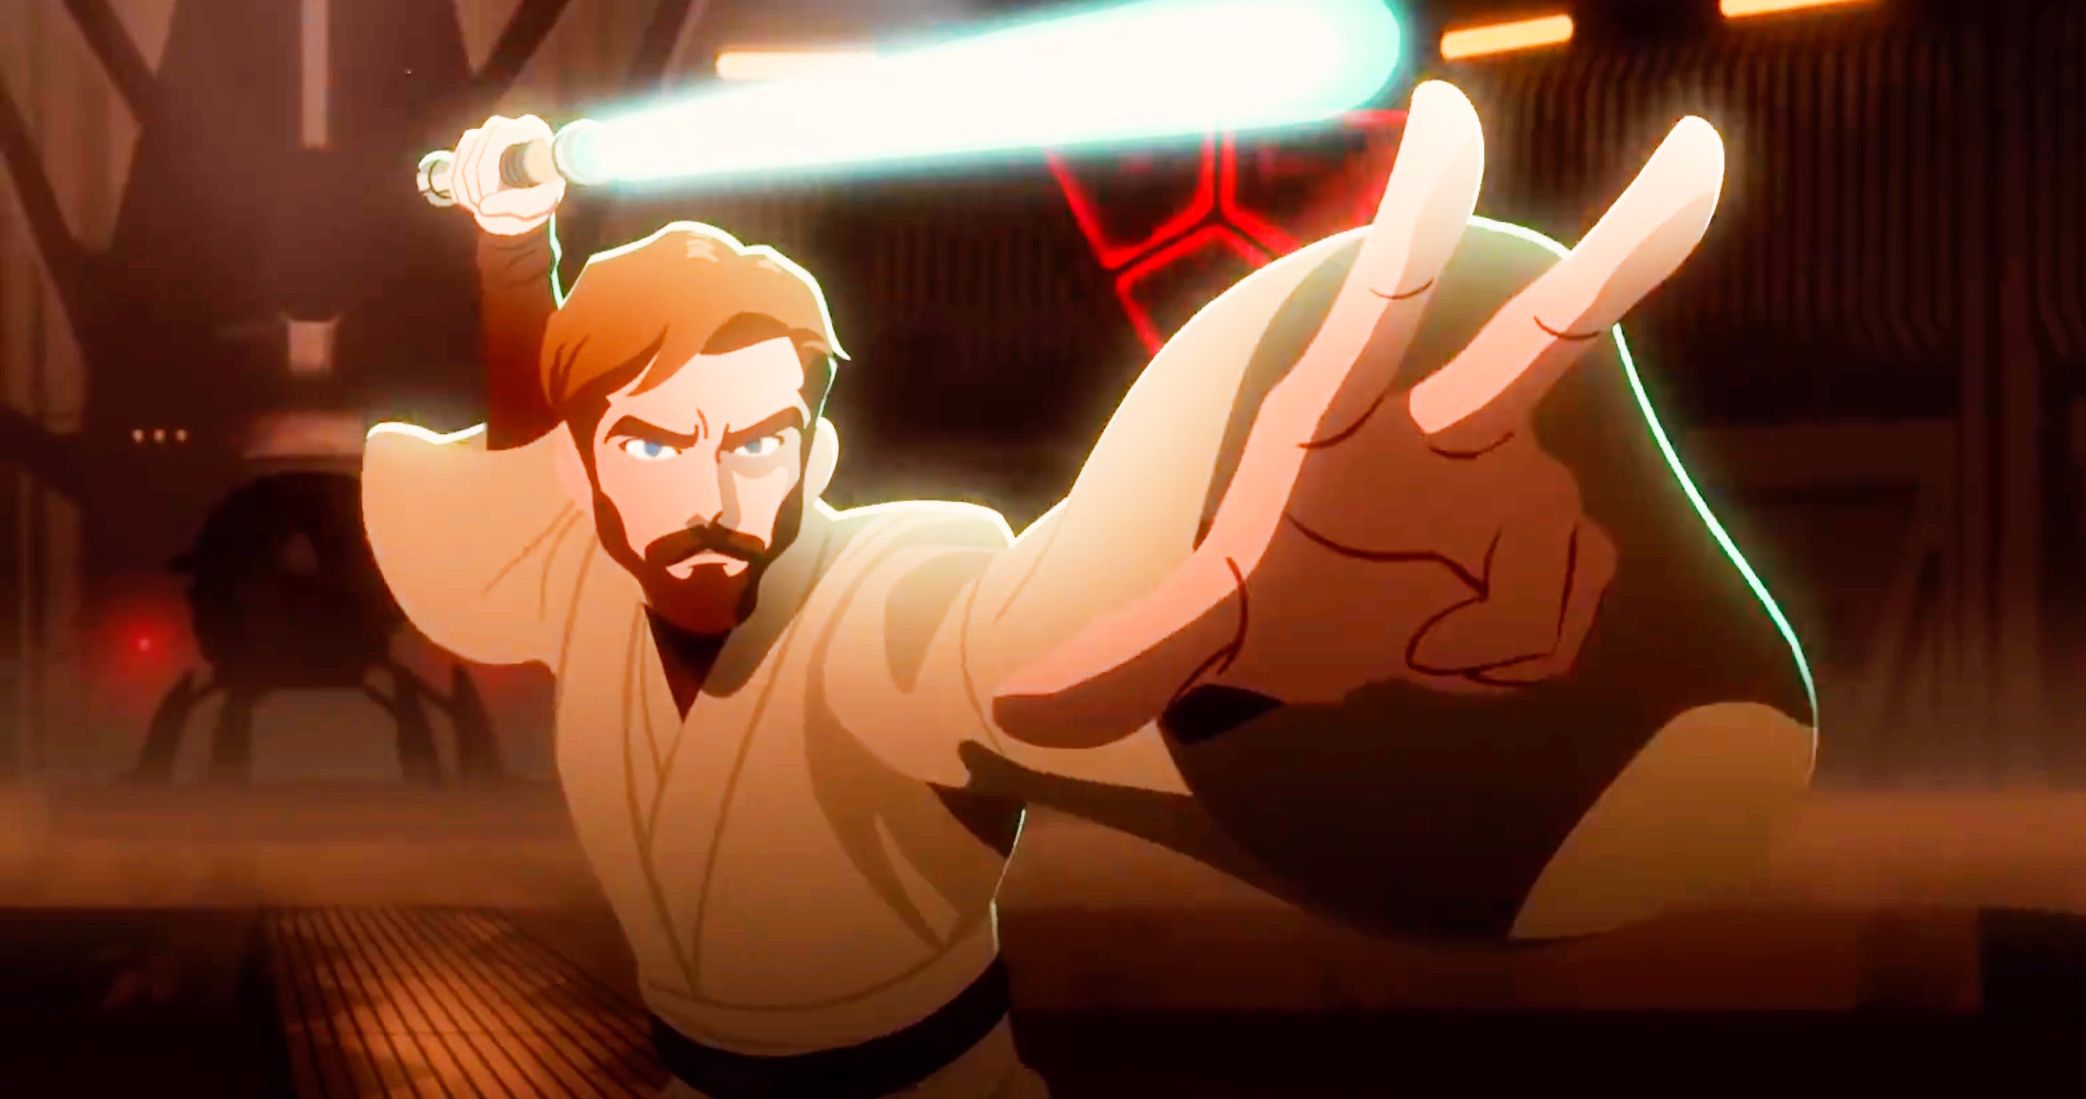 New Obi-Wan Kenobi Animated Short Relives the Jedi Master's Star Wars Saga